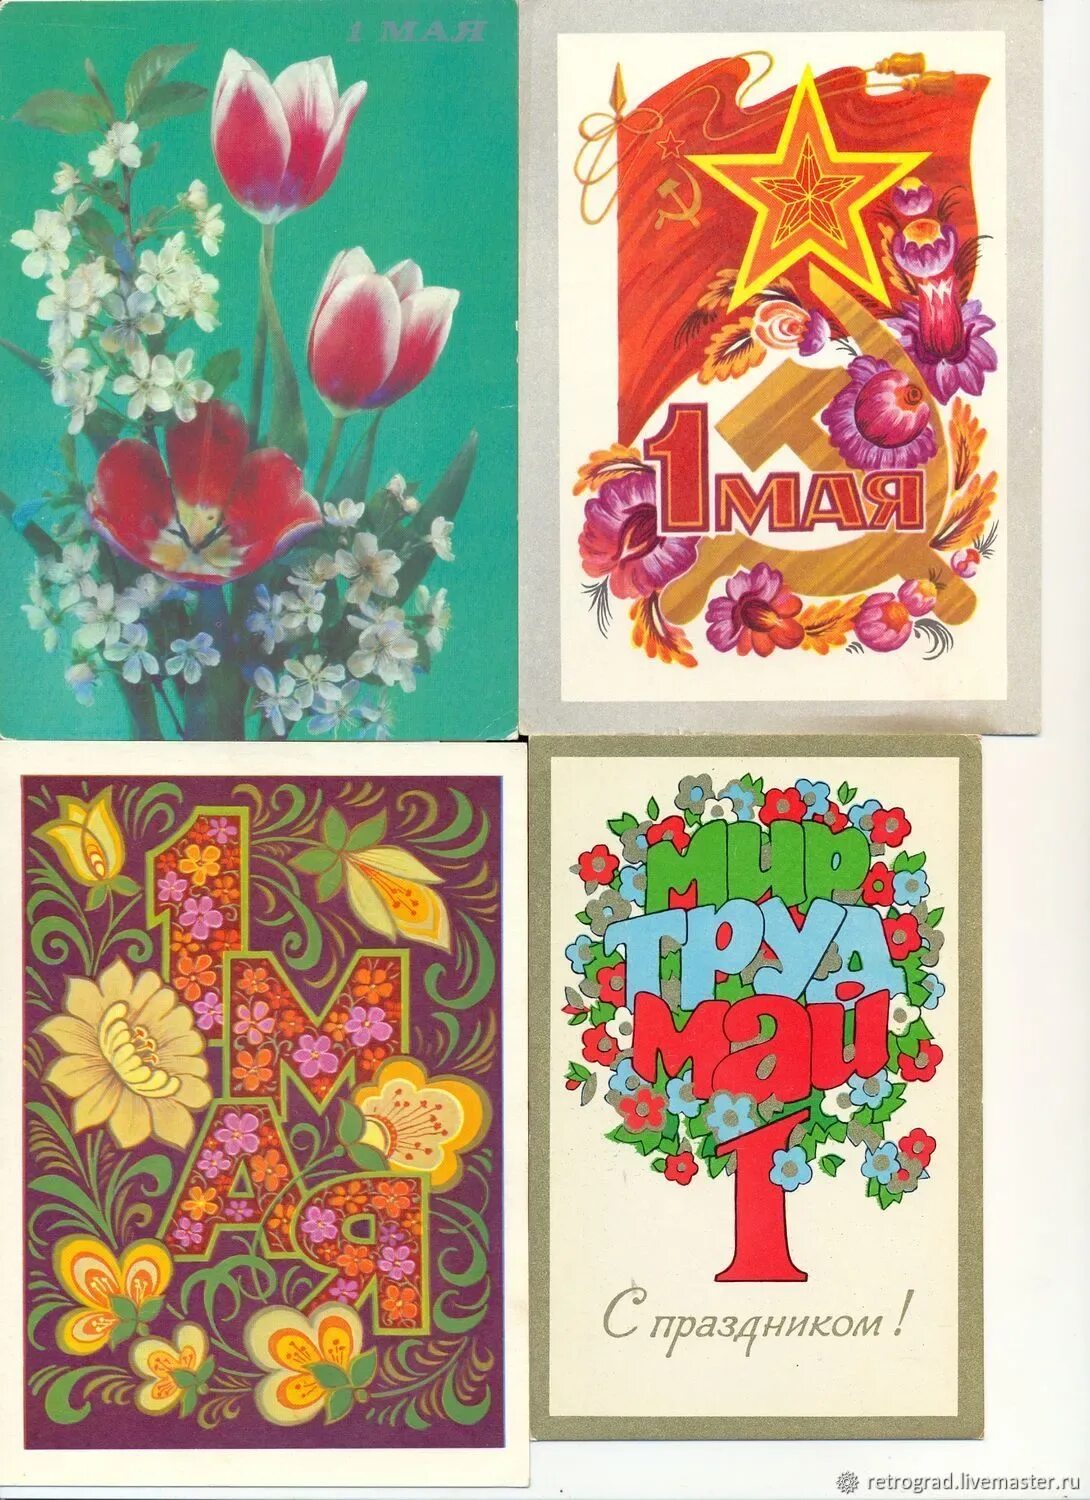 Мир труд май открытка. Советские открытки 1 ма. Советские открытки с 1 мая. Мир труд май советские открытки. Стильные открытки с 1 мая.